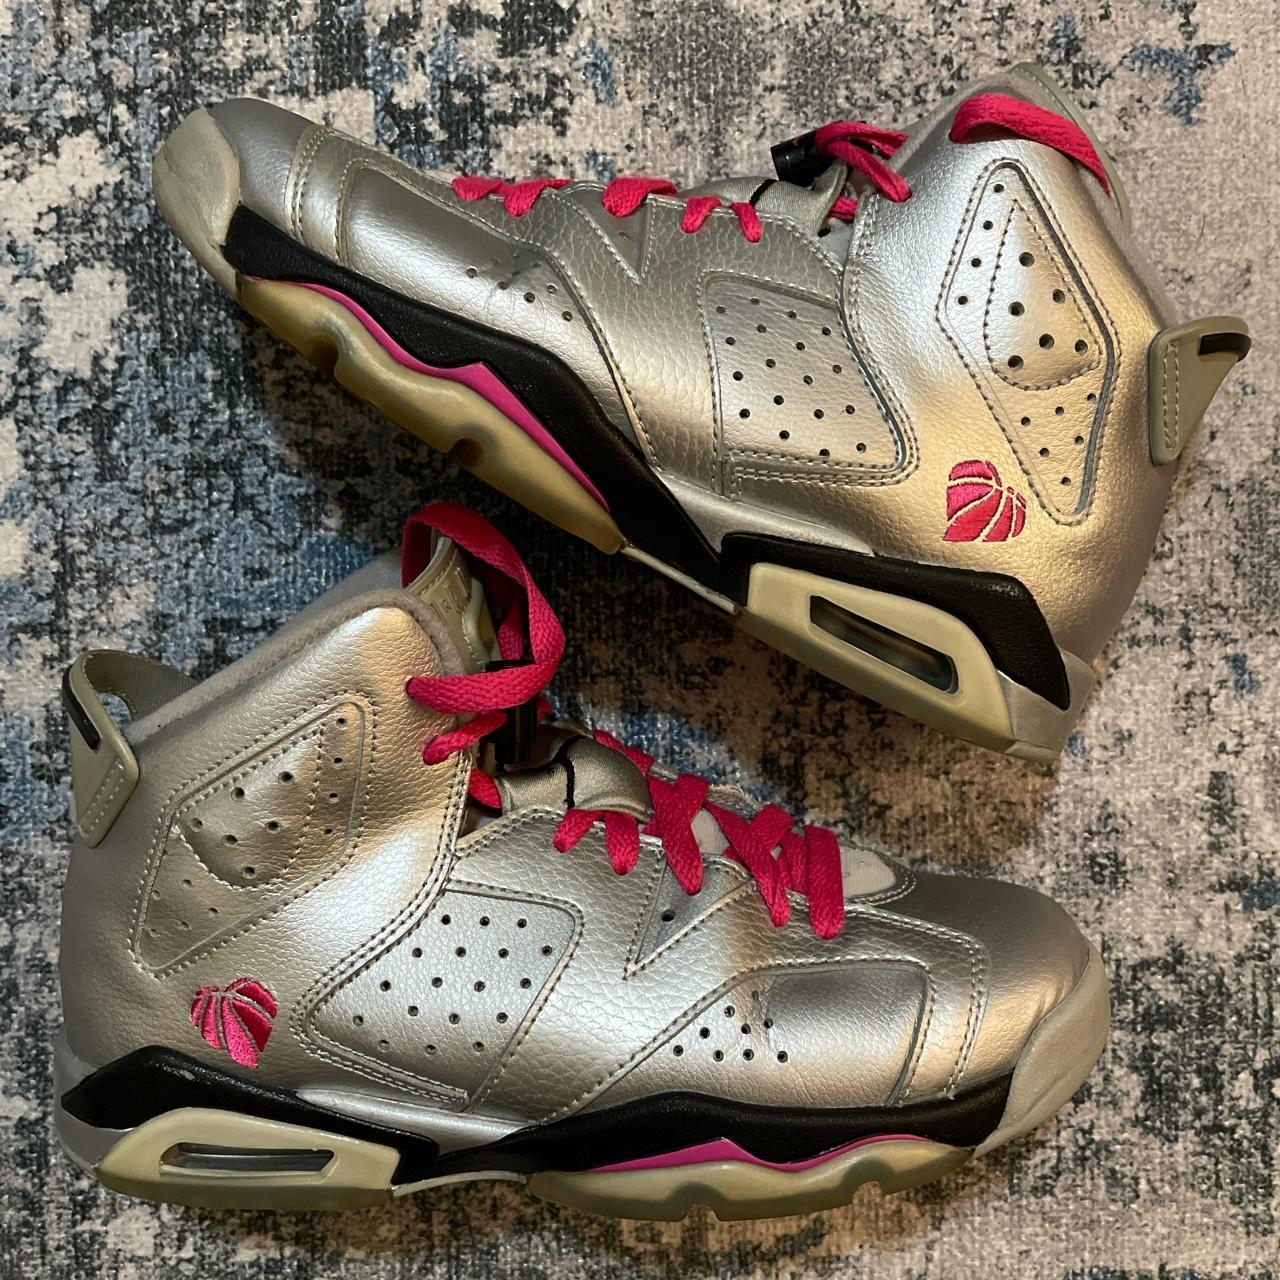 Product Image 1 - Jordan 6 “Valentines Day” Sneaker!

Size:5.5y
Release:11/19/13

#Jordan